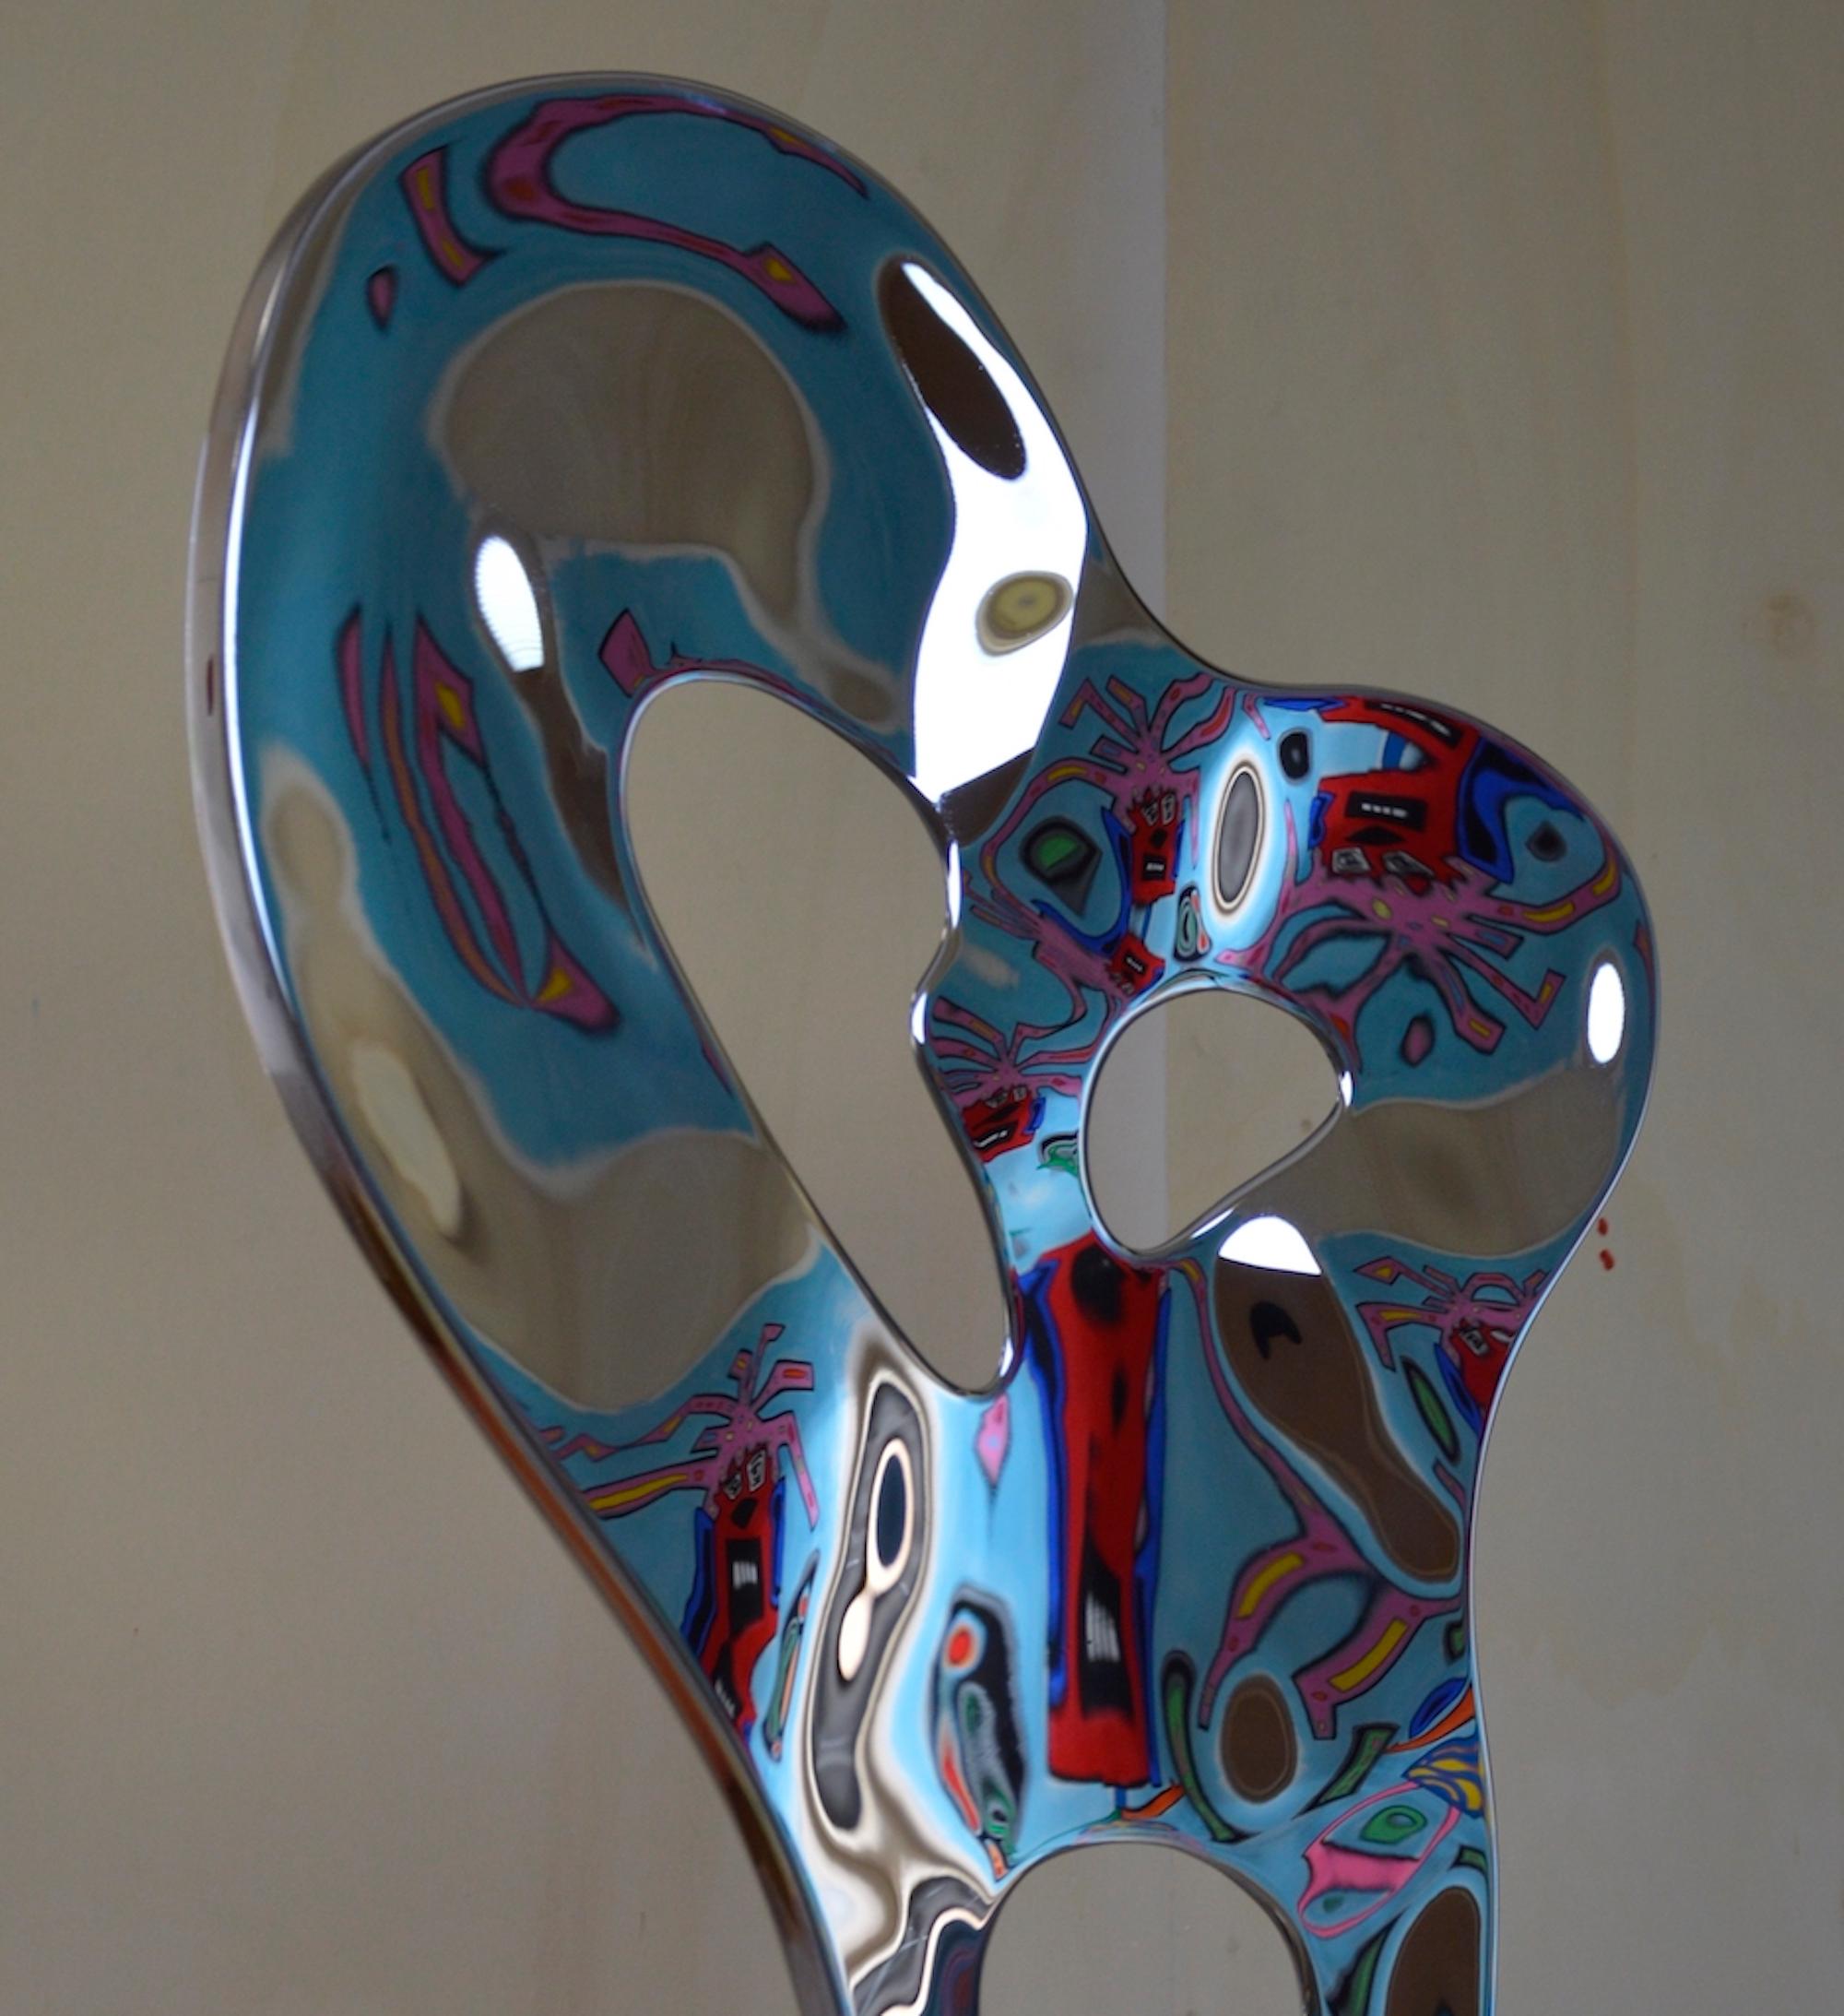 Ectoplasm II de Franck K - Sculpture en acier inoxydable, reflets, lumière, vision en vente 4